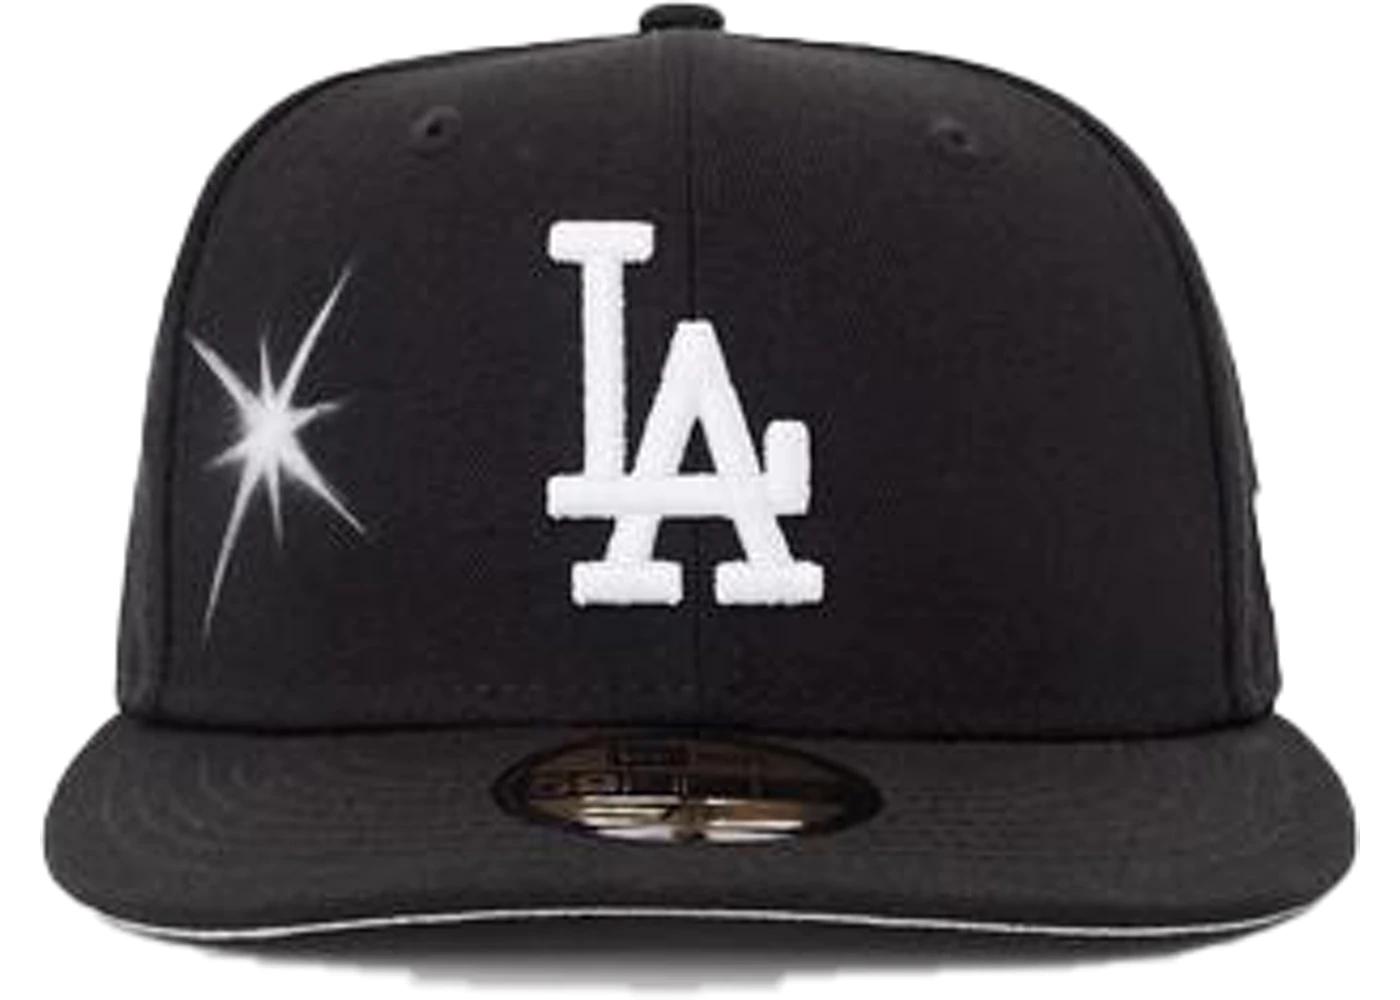 Los Angeles Dodgers Fitted Hat Black by AY EL AY EN